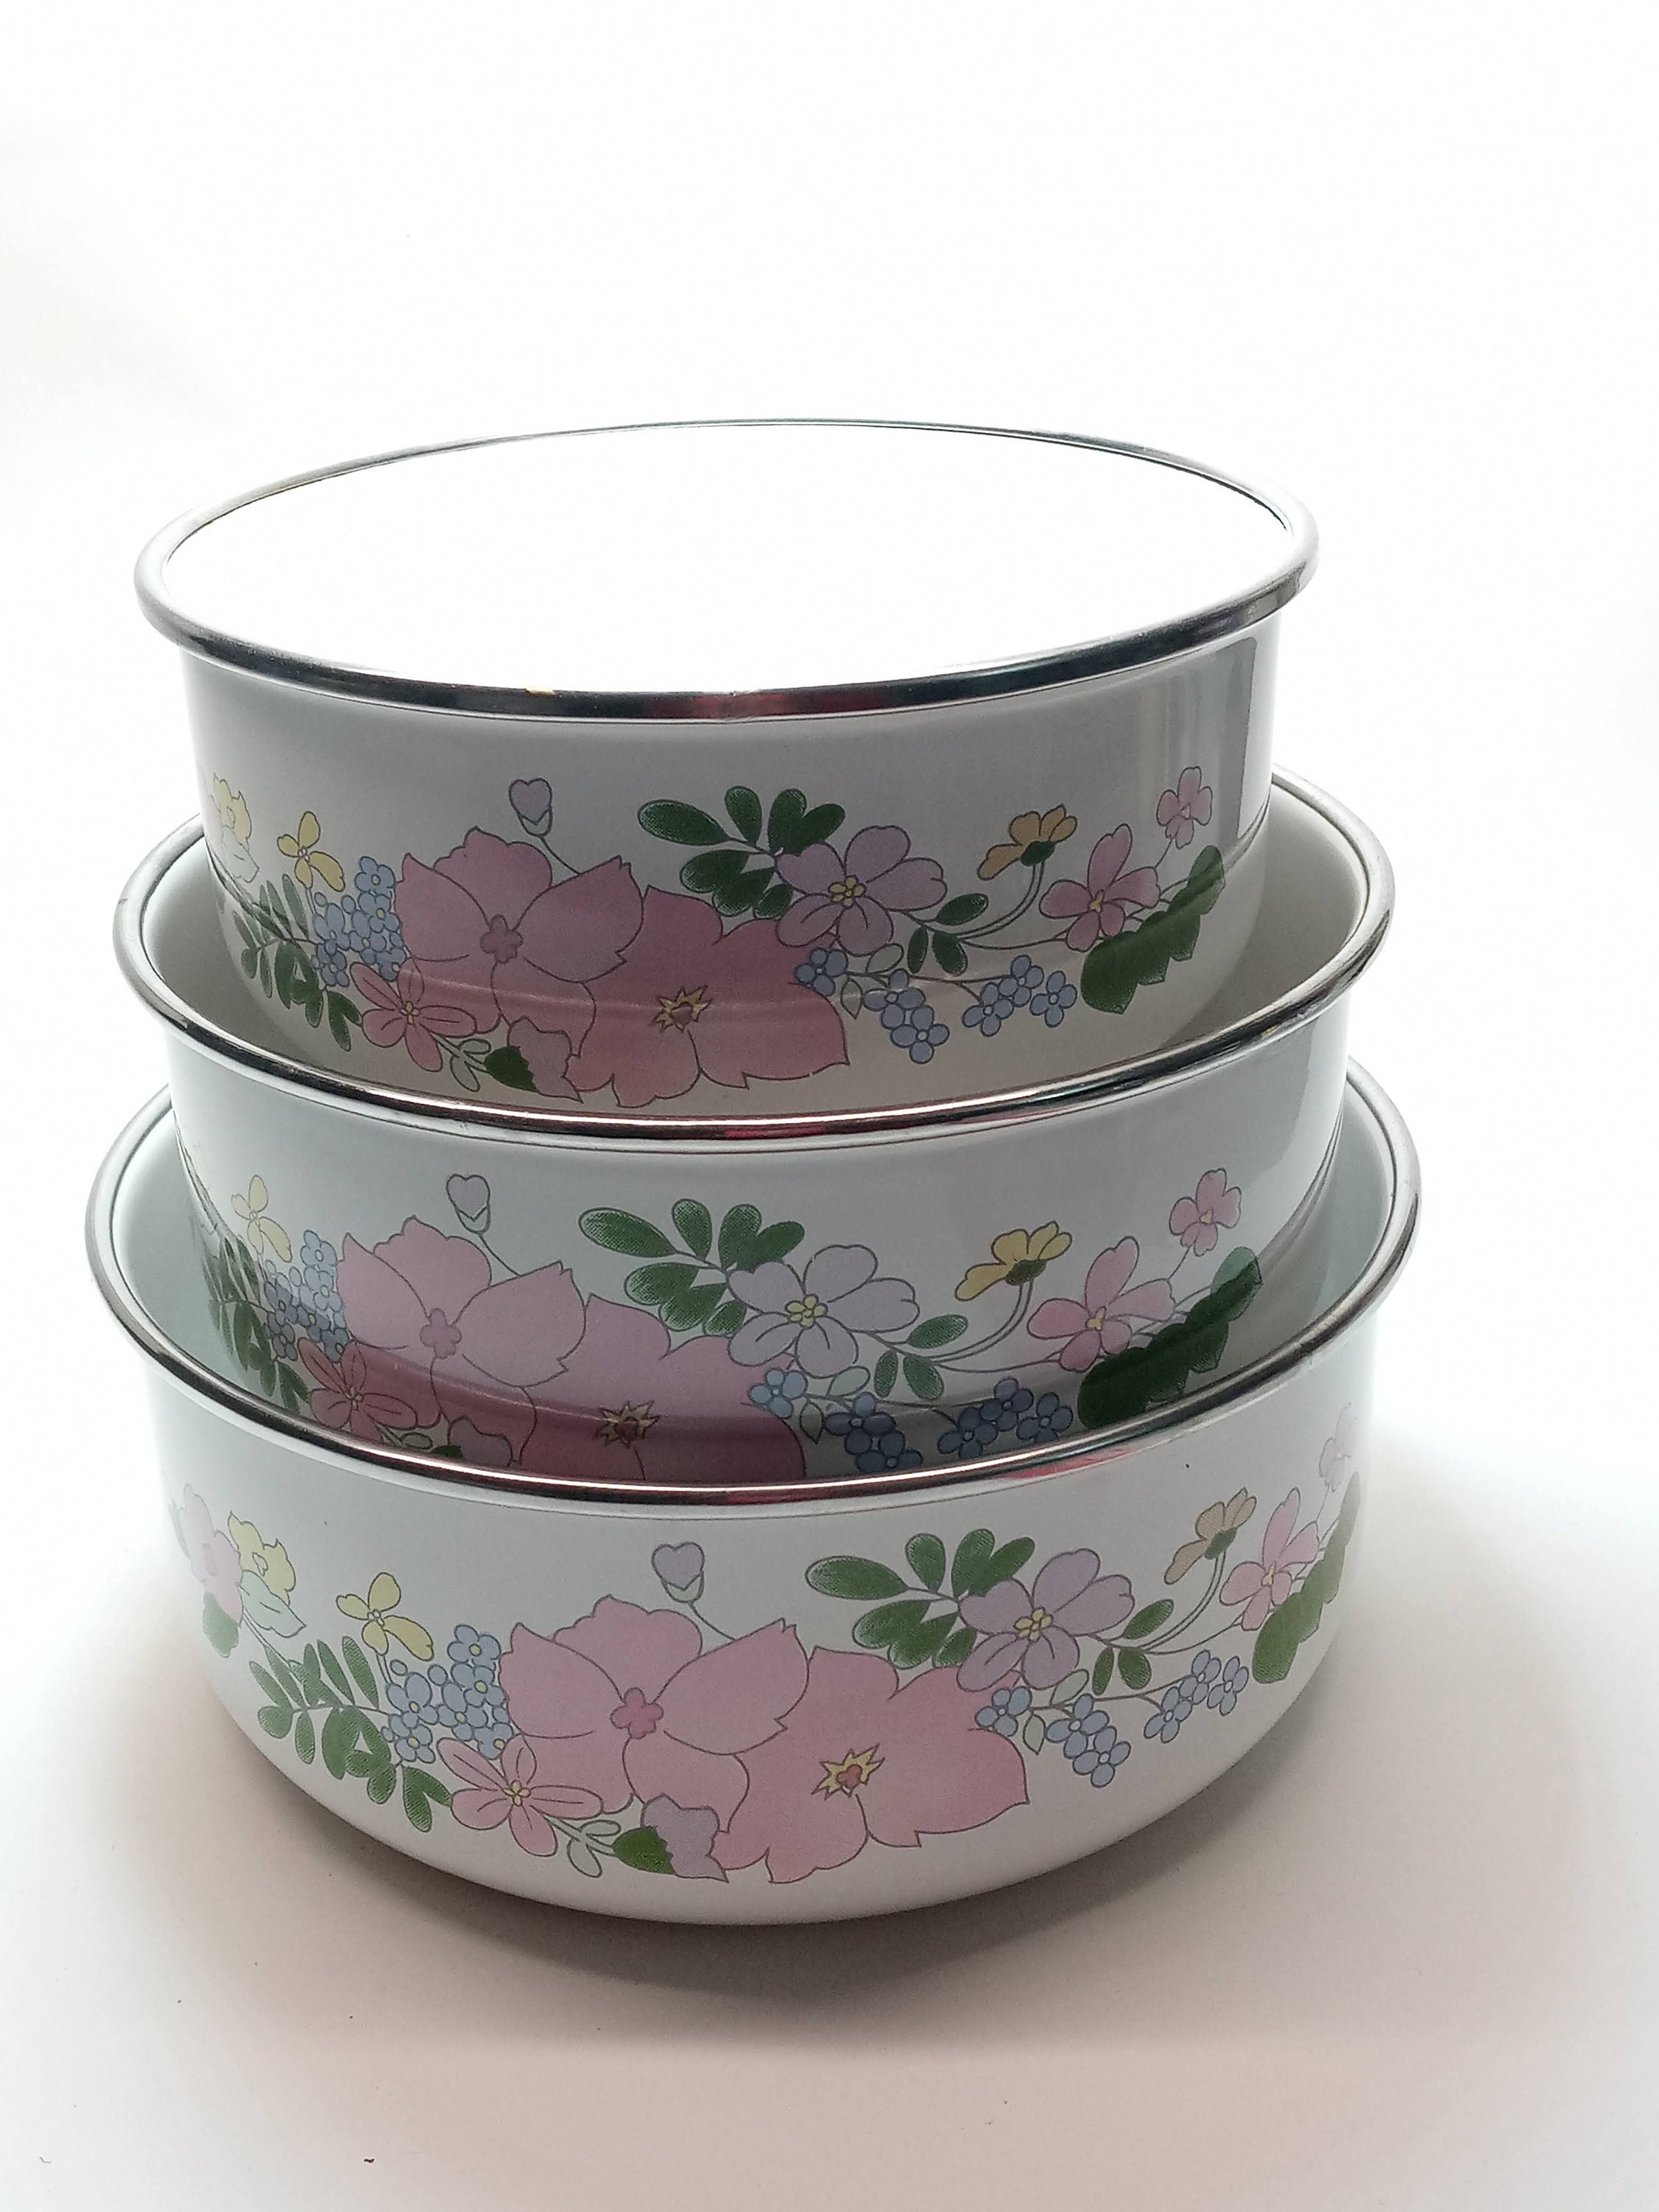 Vintage Kobe Porcelain Enamelware Mixing Bowl & Small Bowl with